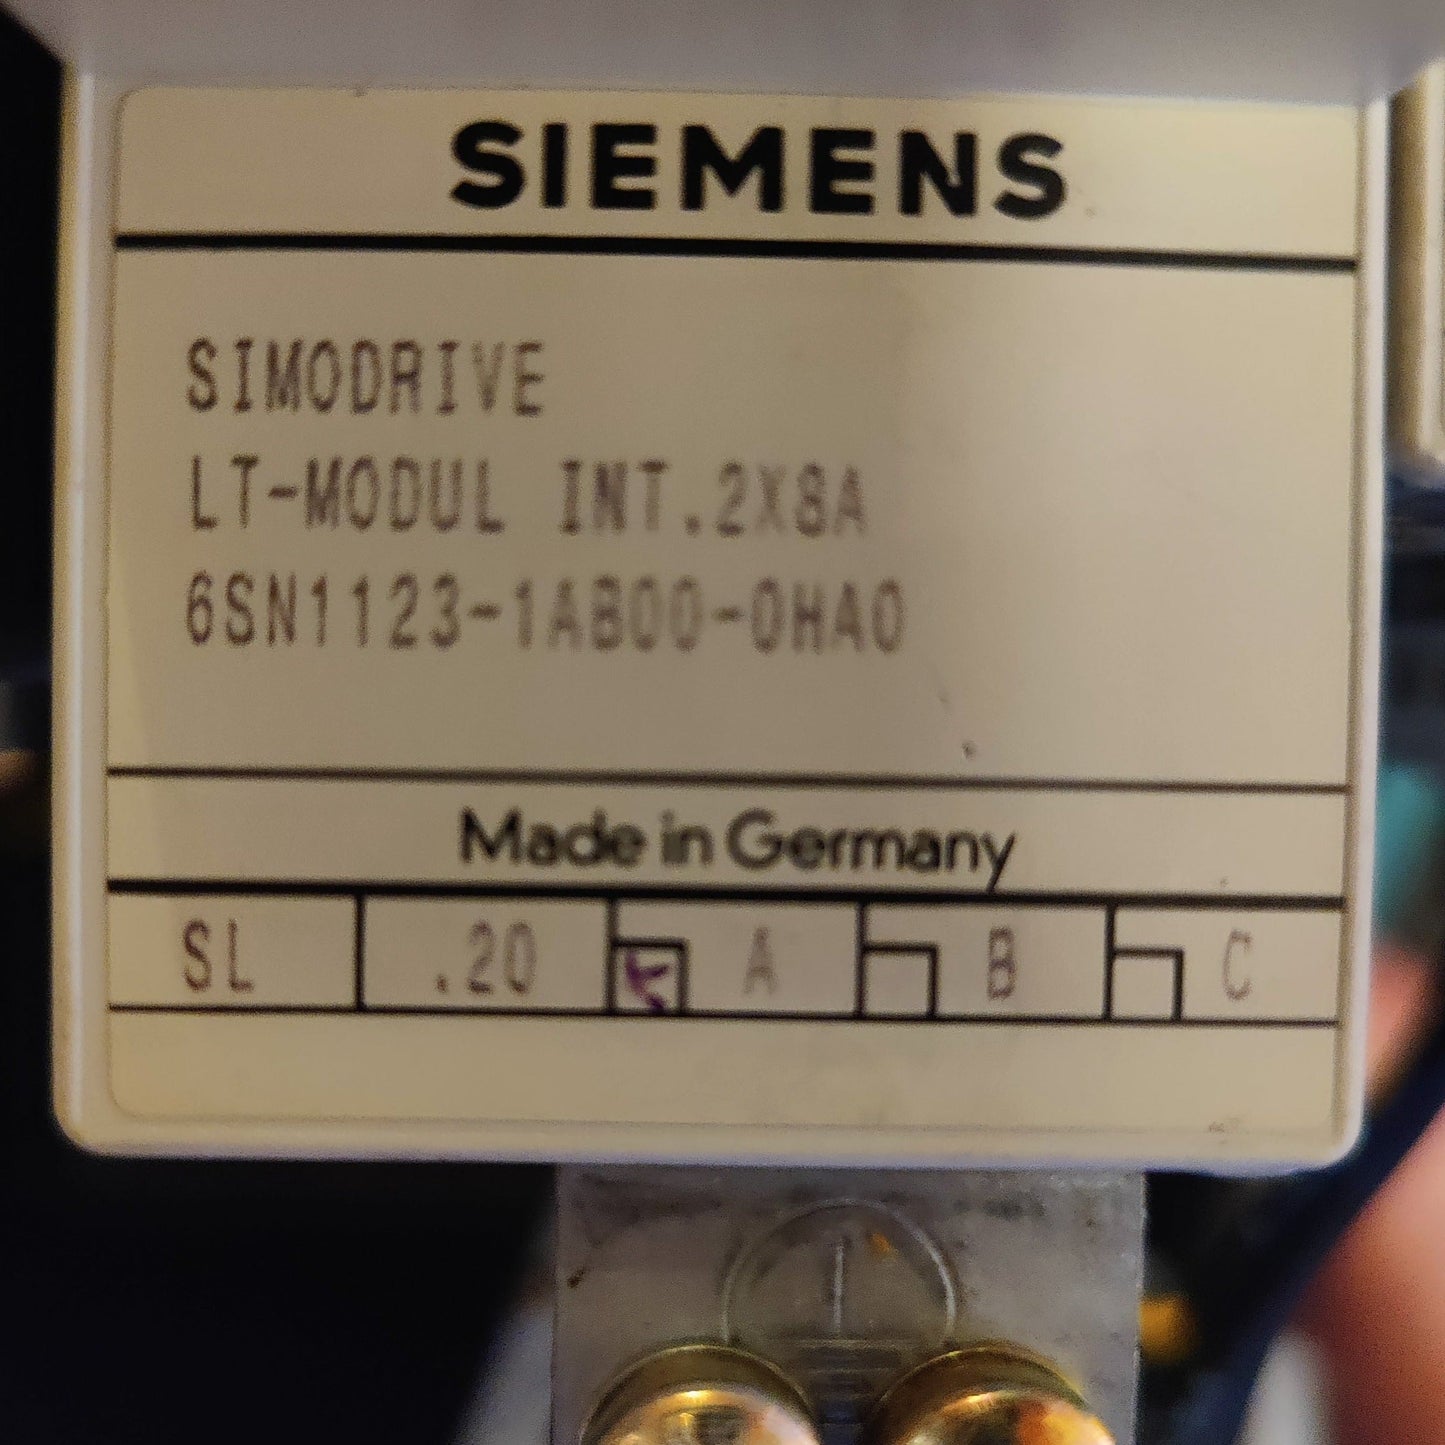 Simodrive 611, LT-Modul, 2 x 8A (6SN1123-1AB00-0HA0)